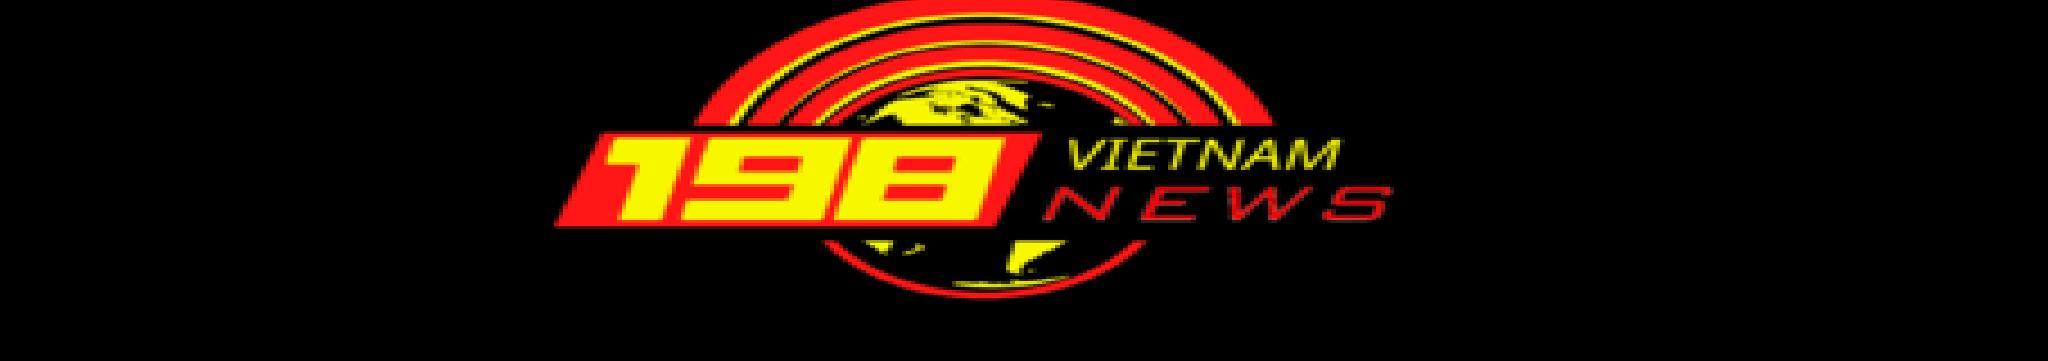 198 Vietnam News's profile banner